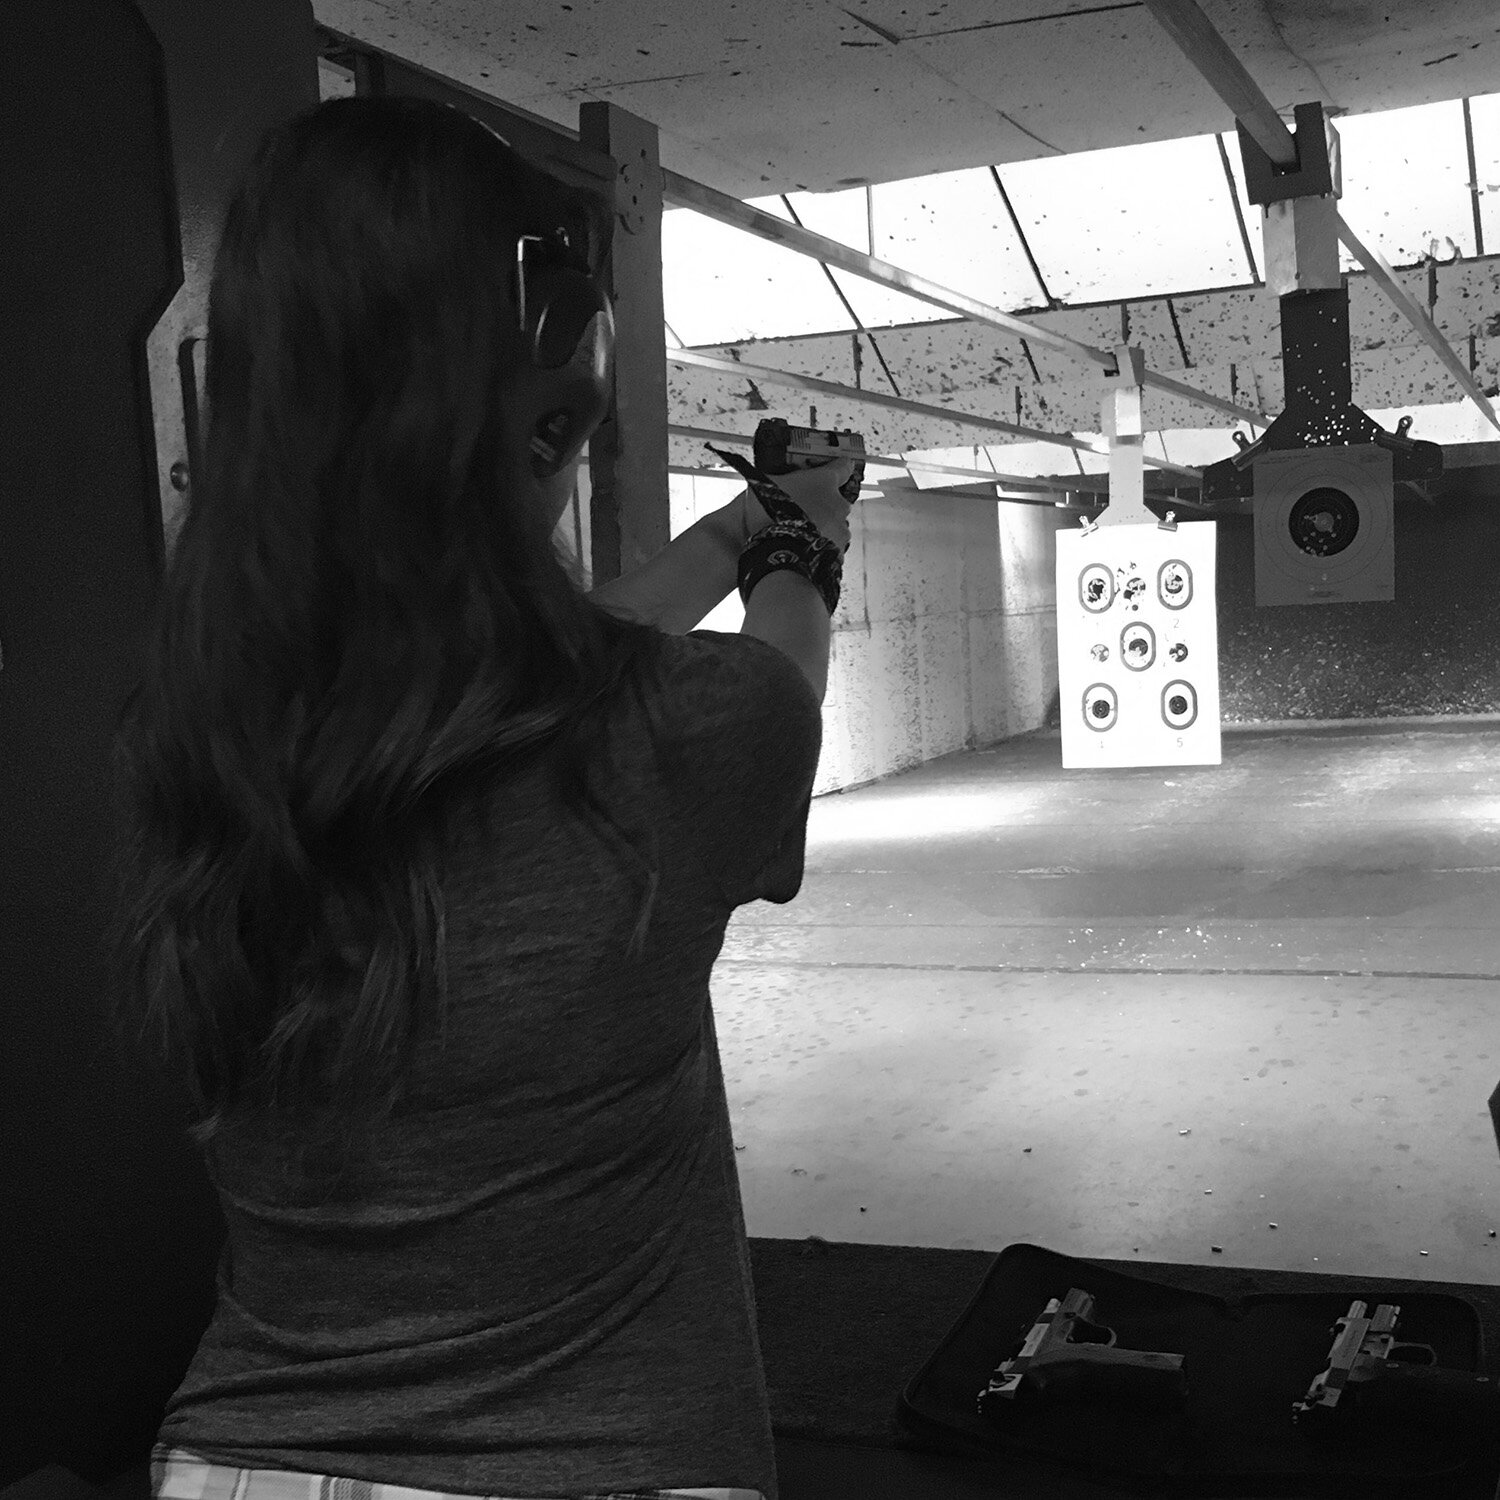 Renting a Gun at the Shooting Range